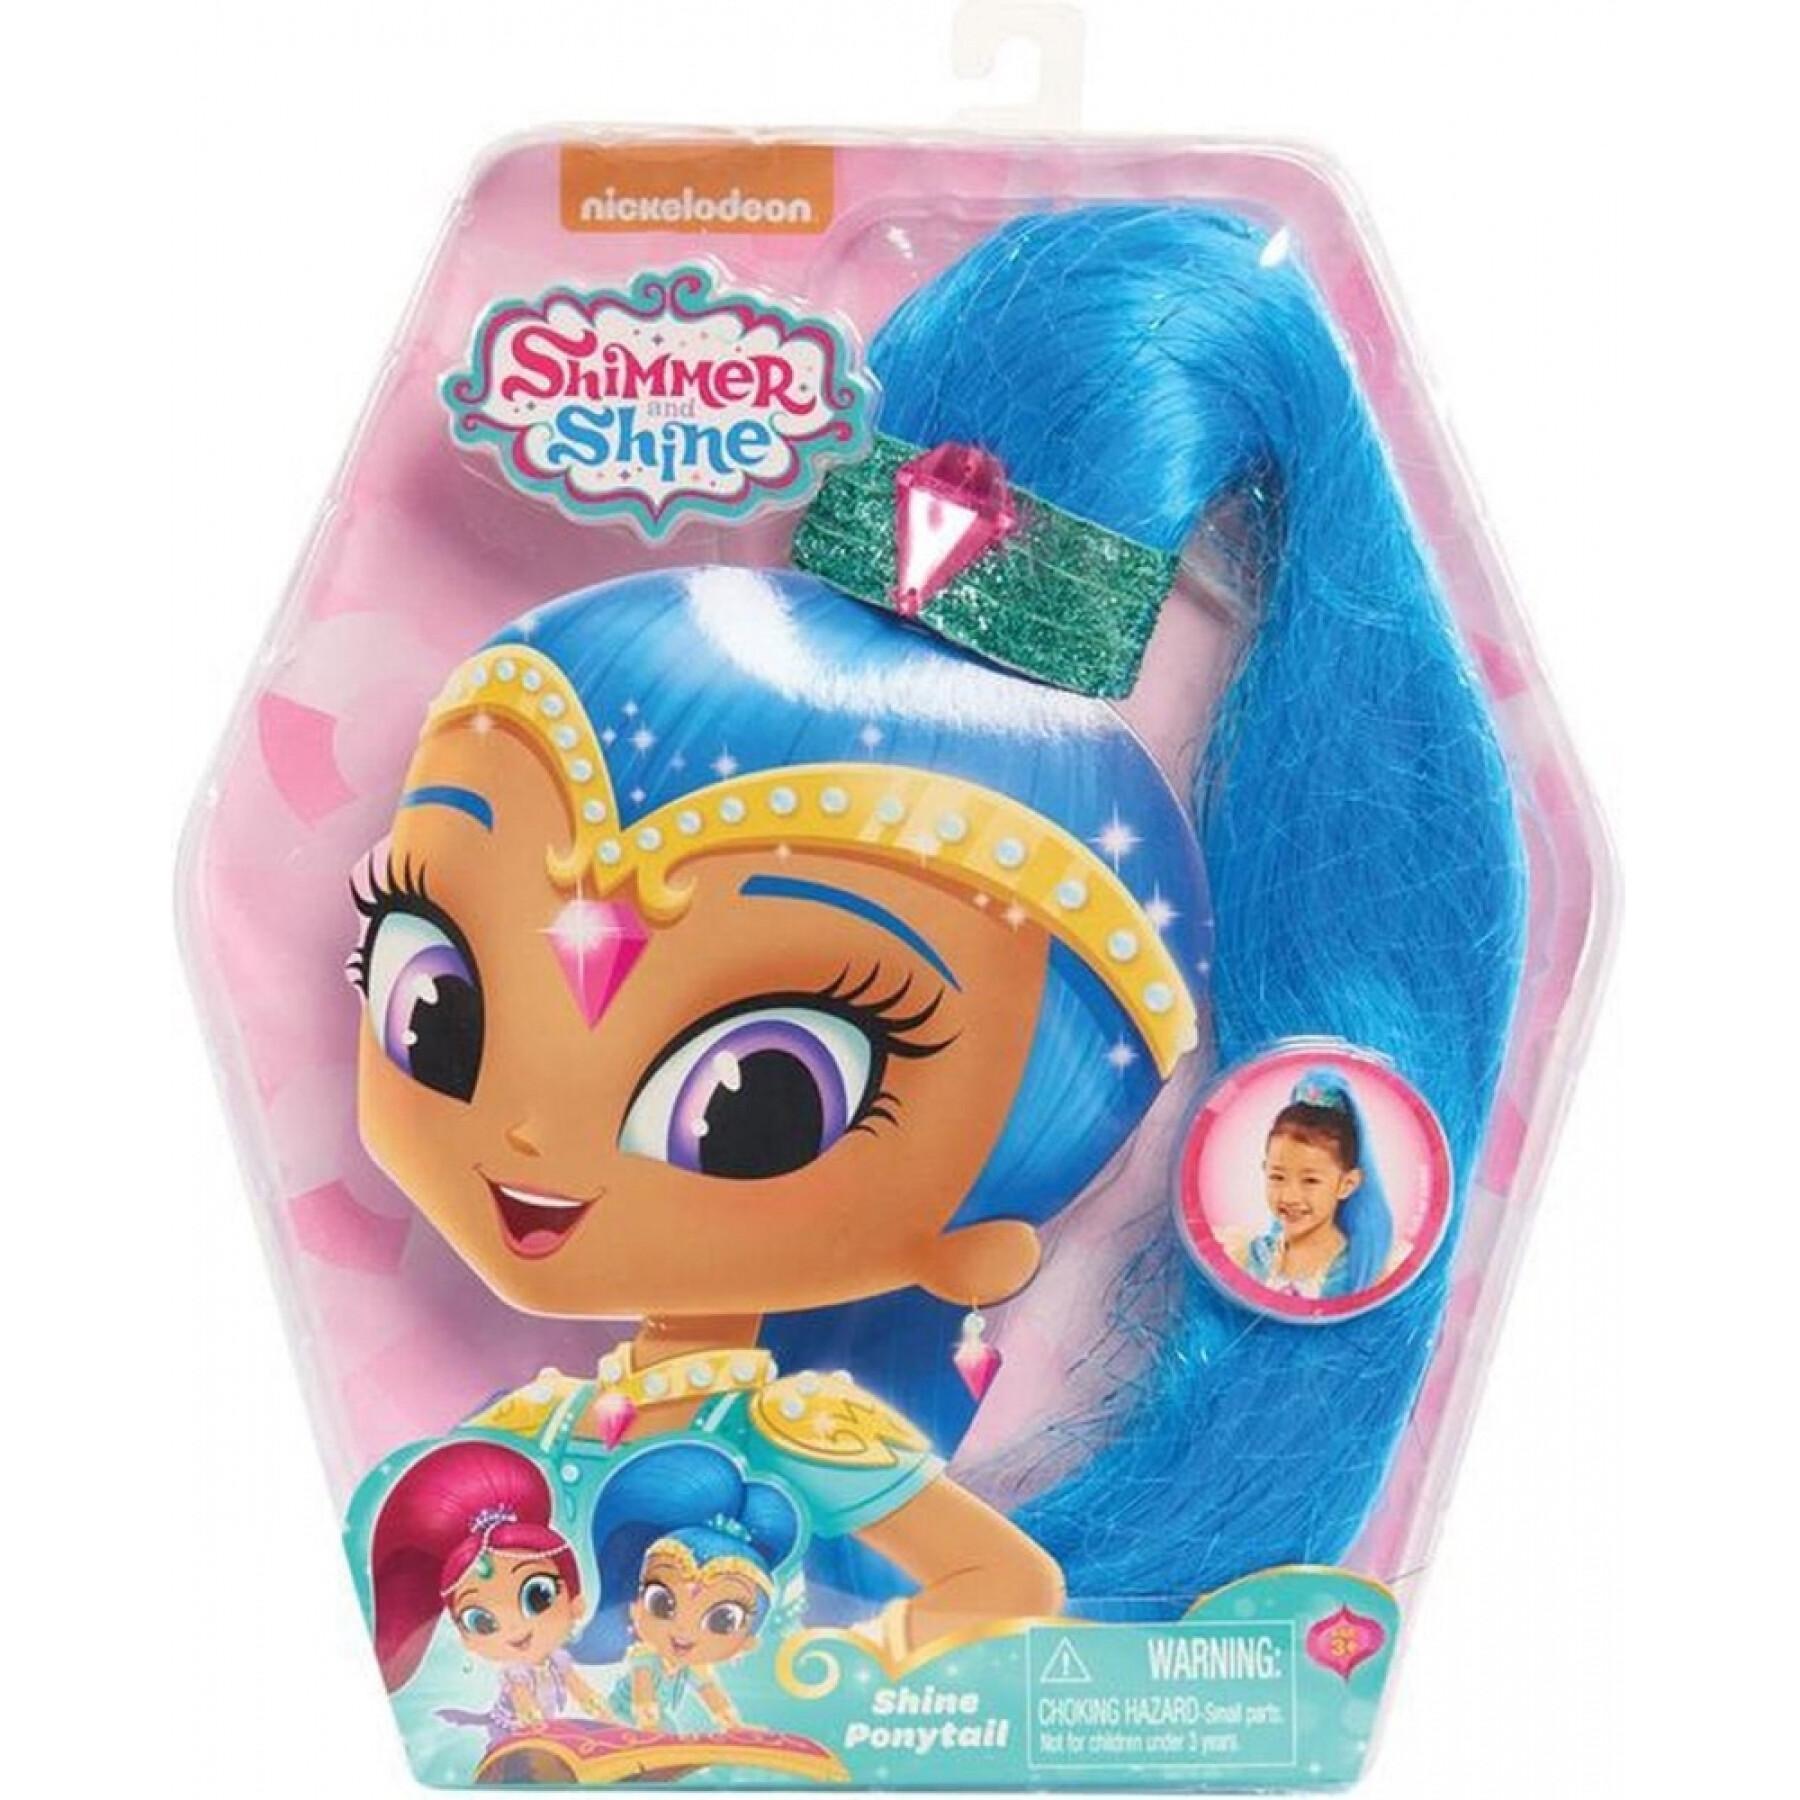 Ponytail hairpiece ShimmerShine